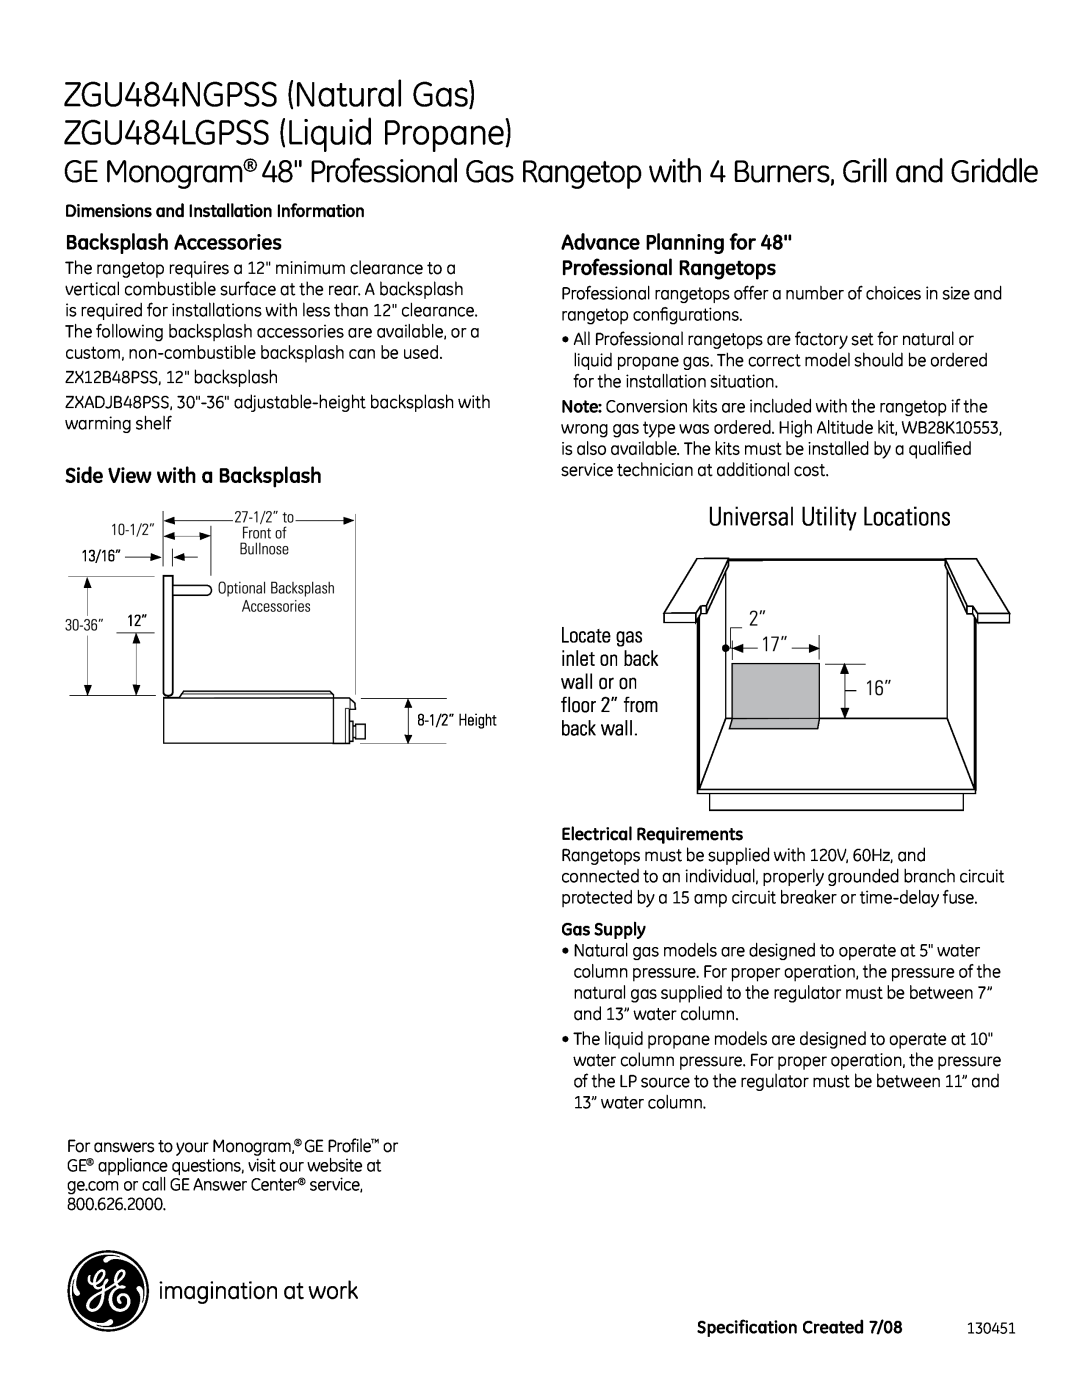 GE Monogram ZGU484NGPSS Natural Gas, ZGU484LGPSS Liquid Propane, Backsplash Accessories, Side View with a Backsplash 